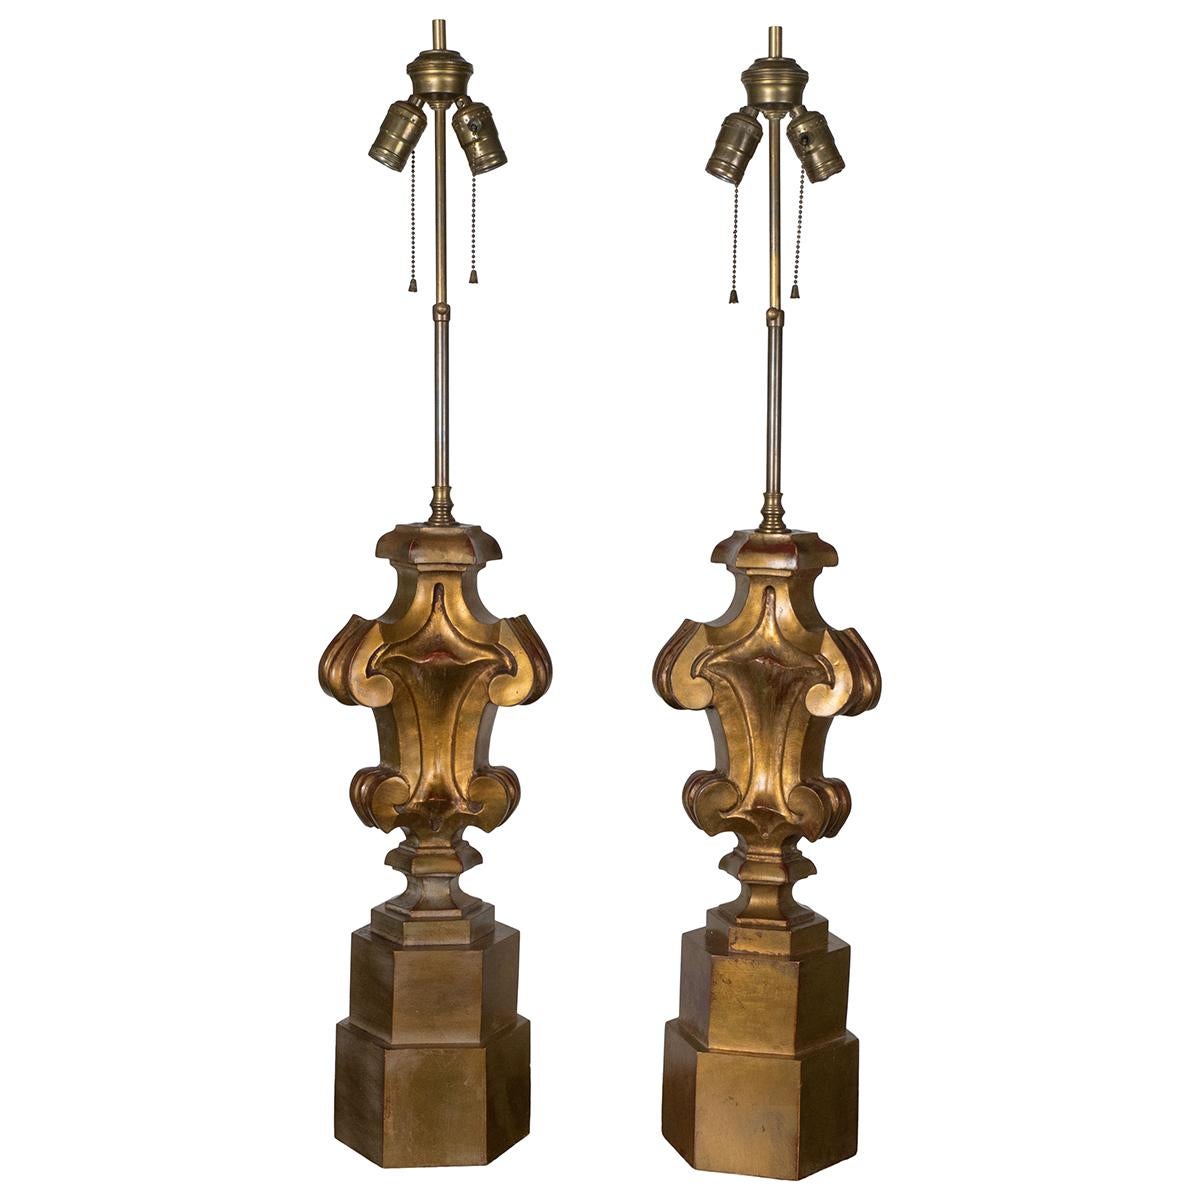 Paar skulptural geschnitzte Tischlampen aus Vergoldungsholz.